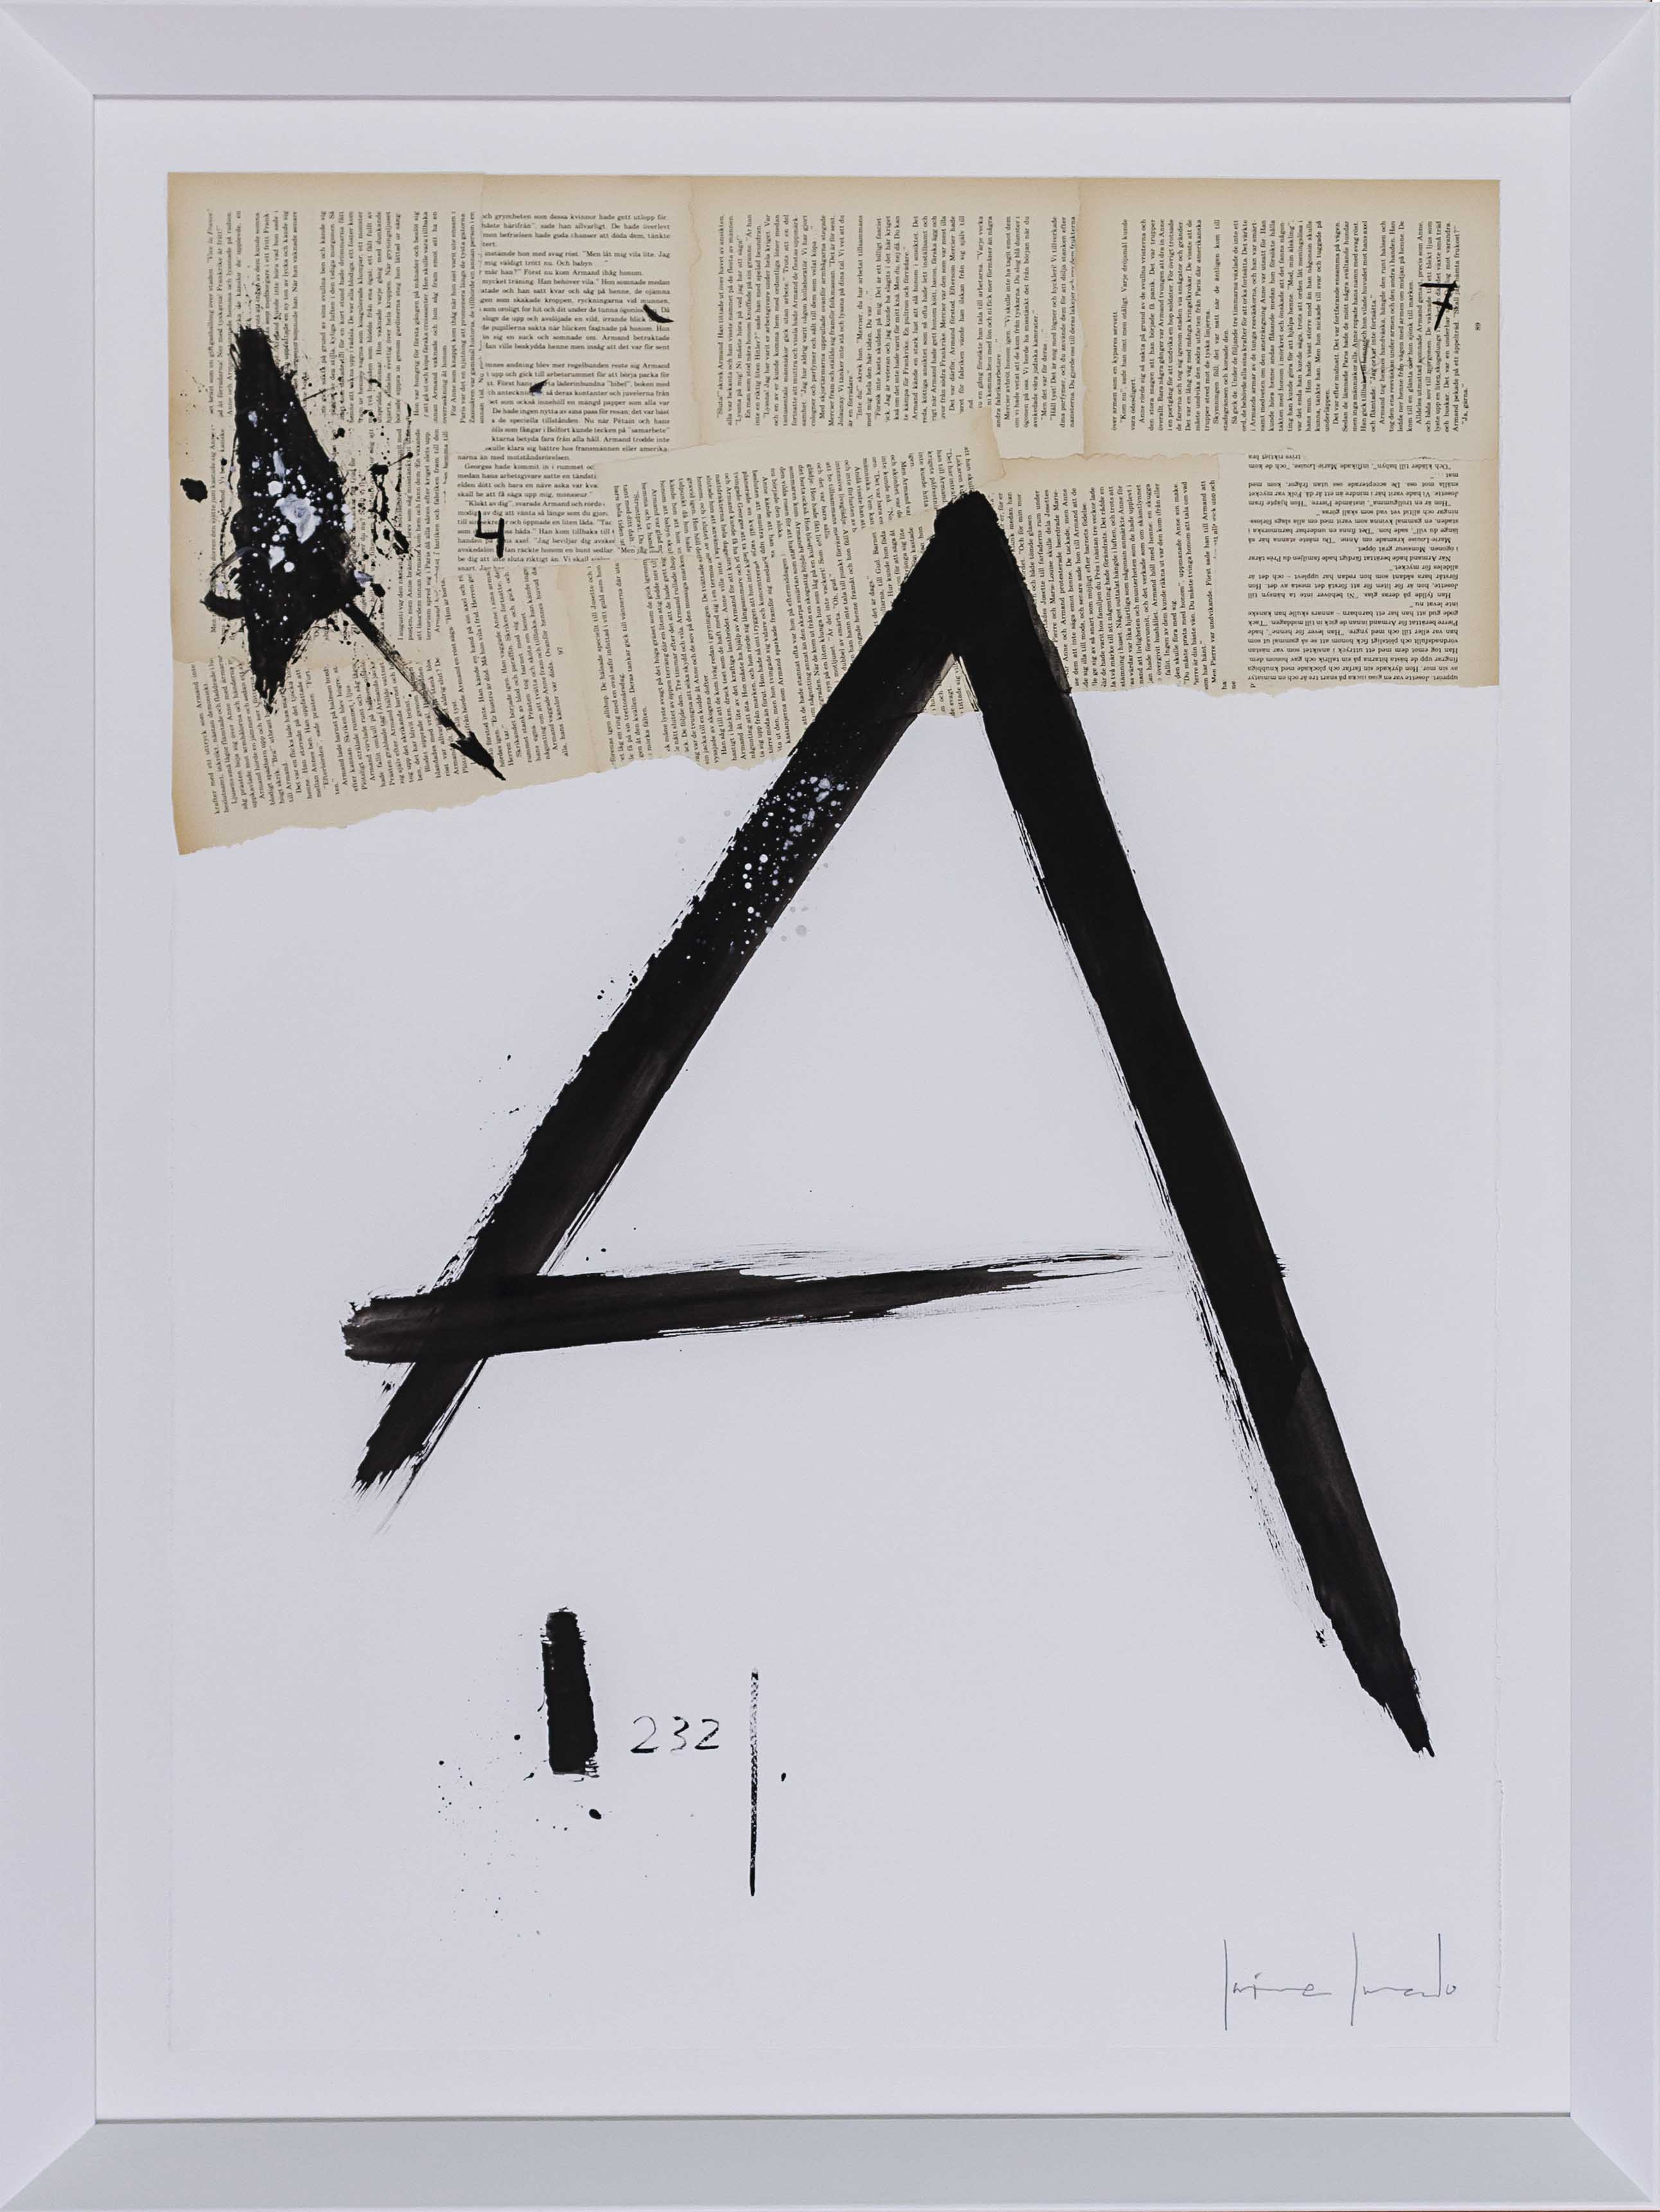 'A' mixed tecnique of the Spanish artist Jaime Jurado for NOVOCUADRO